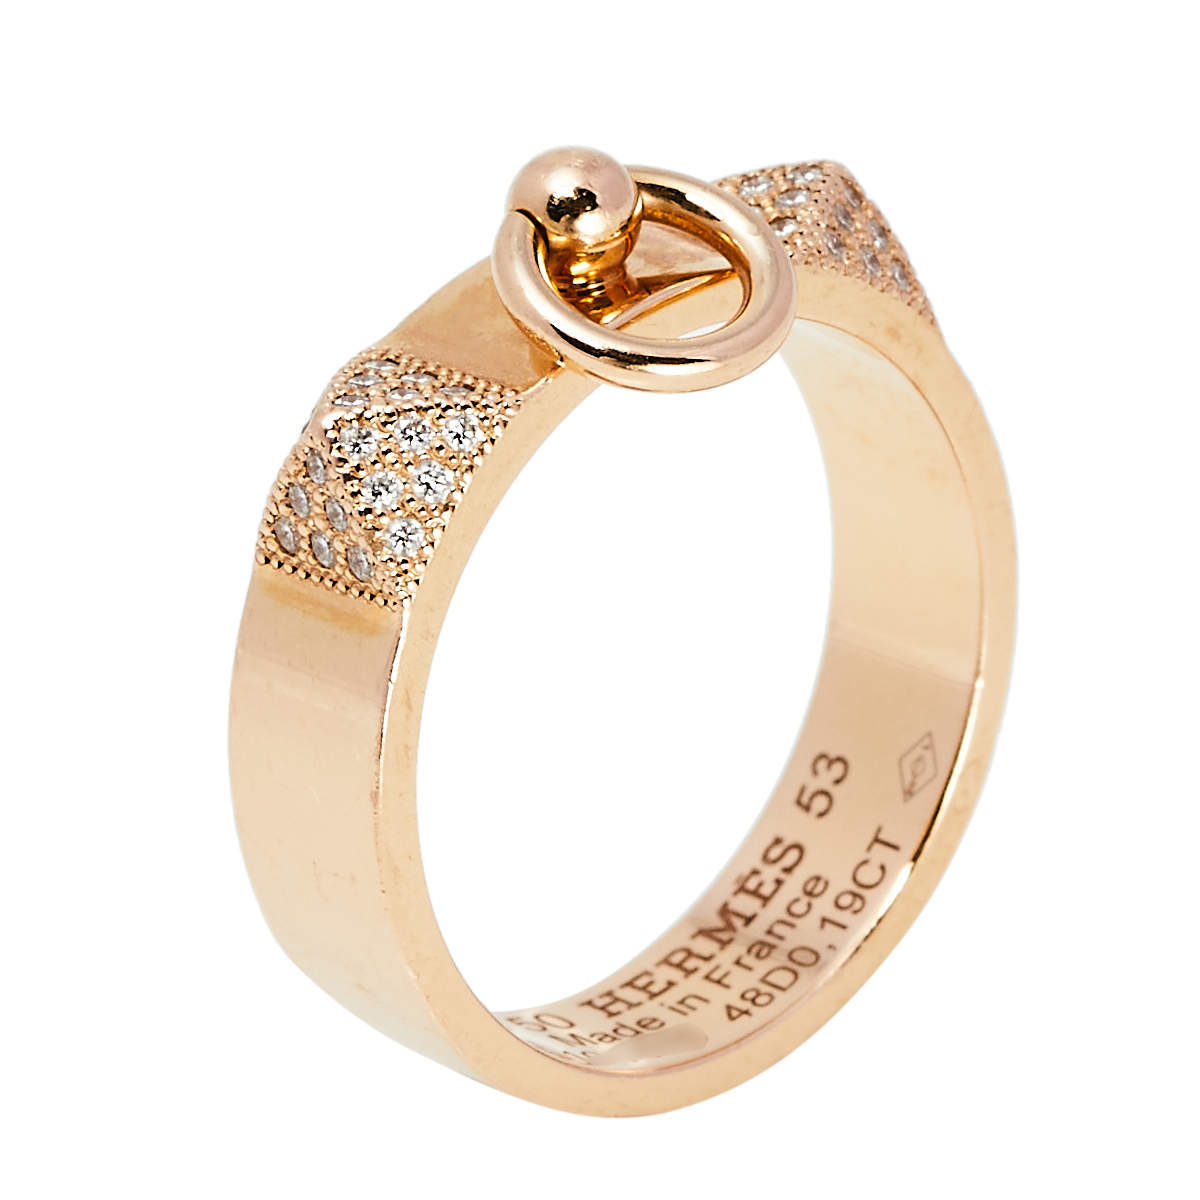 Hermes Collier De Chien Diamond 18K Rose Gold Band Rings Size 53